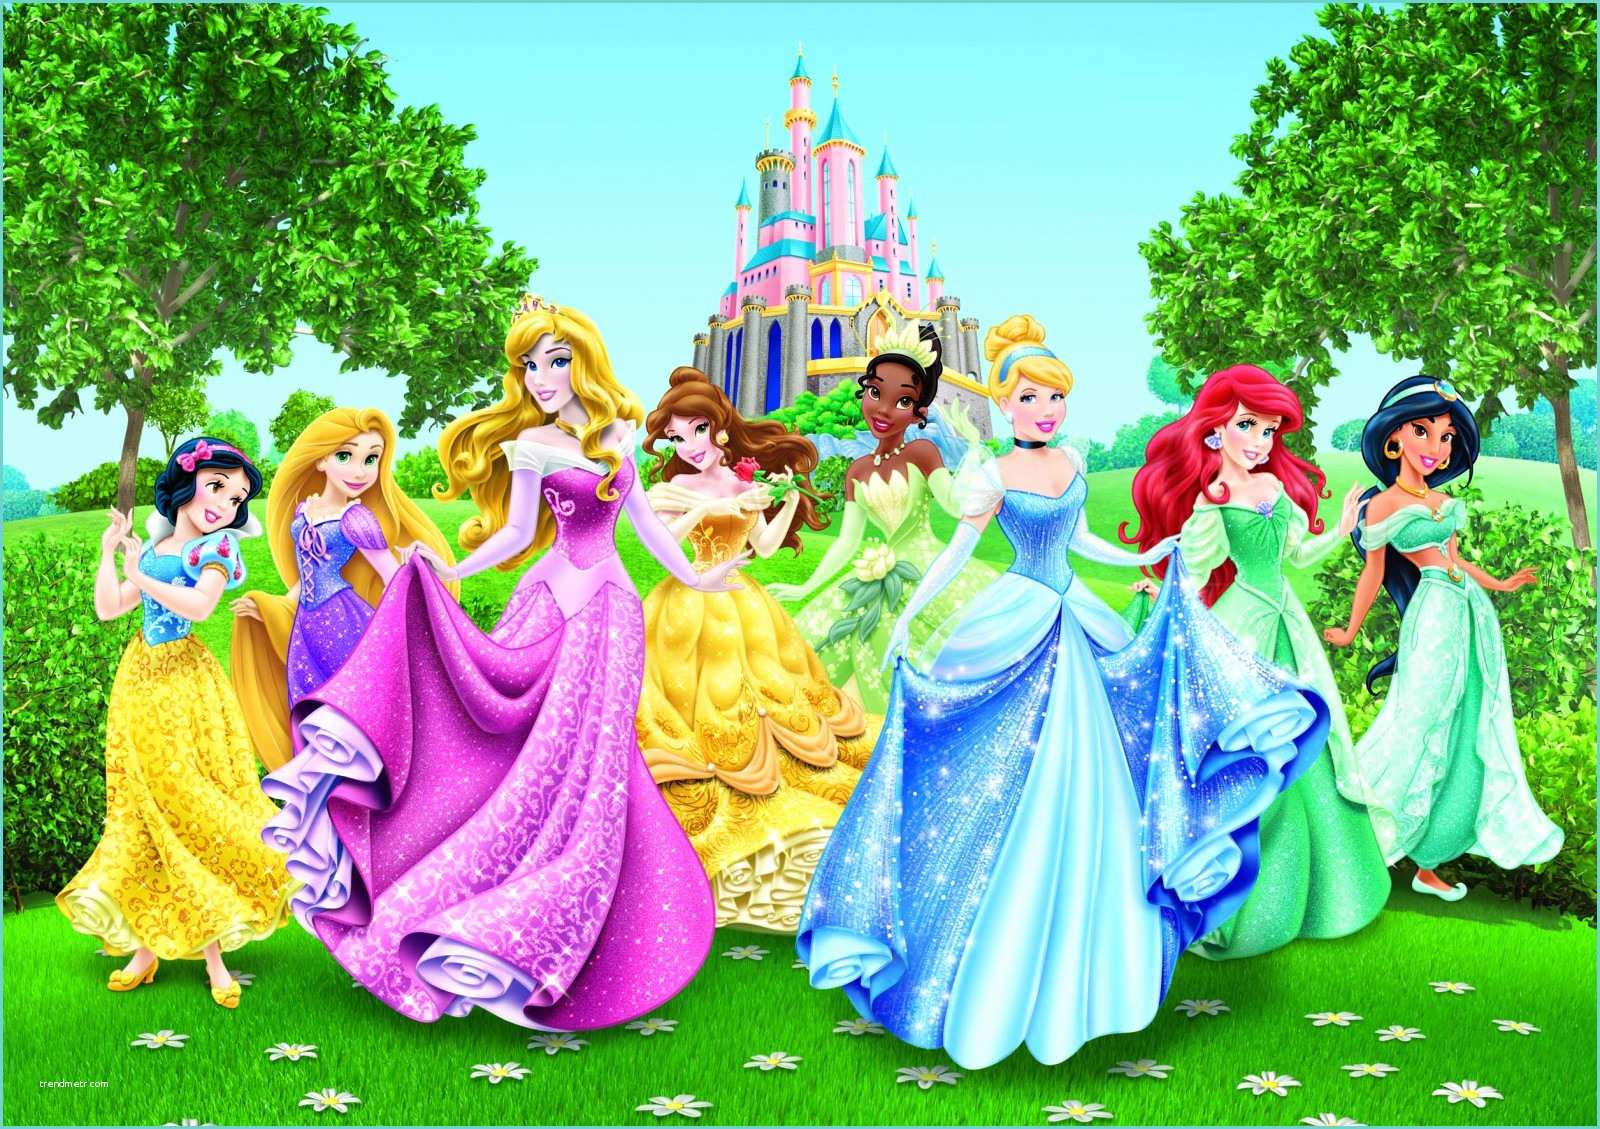 Poster Xxl Disney Fototapete Tapete Disney Prinzessin Cindarella 360 X 254 Cm